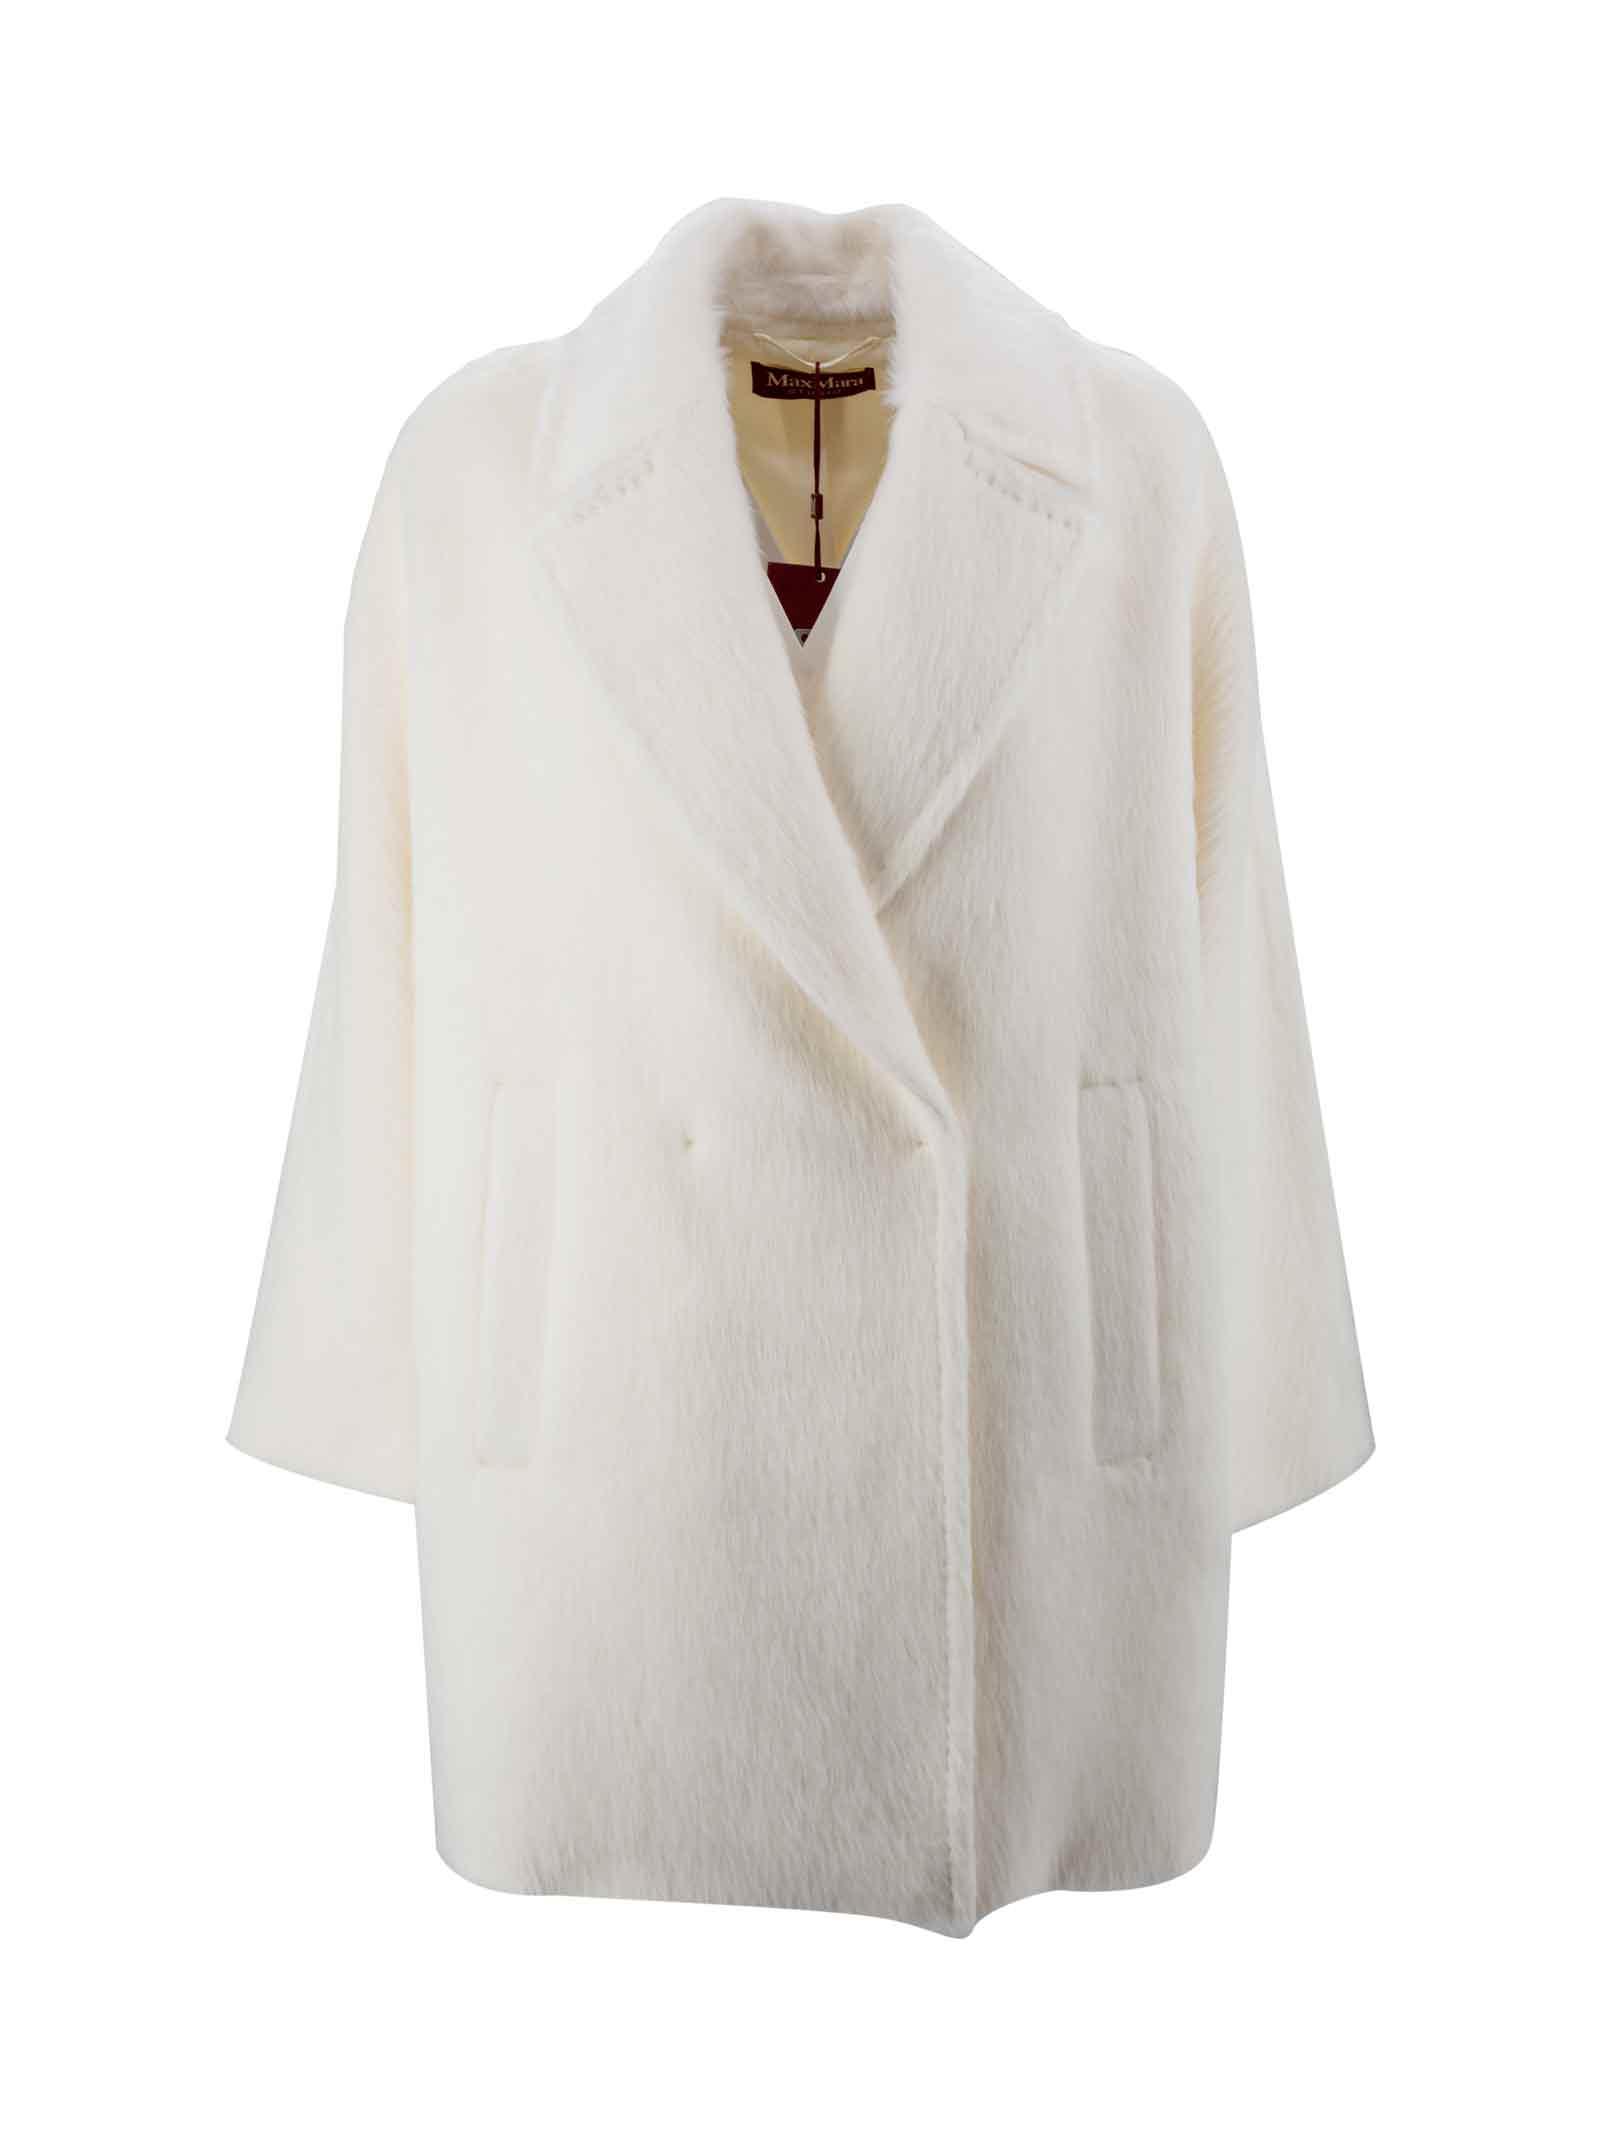 Max Mara Studio Alpaca And Wool Blend Coat in White | Lyst